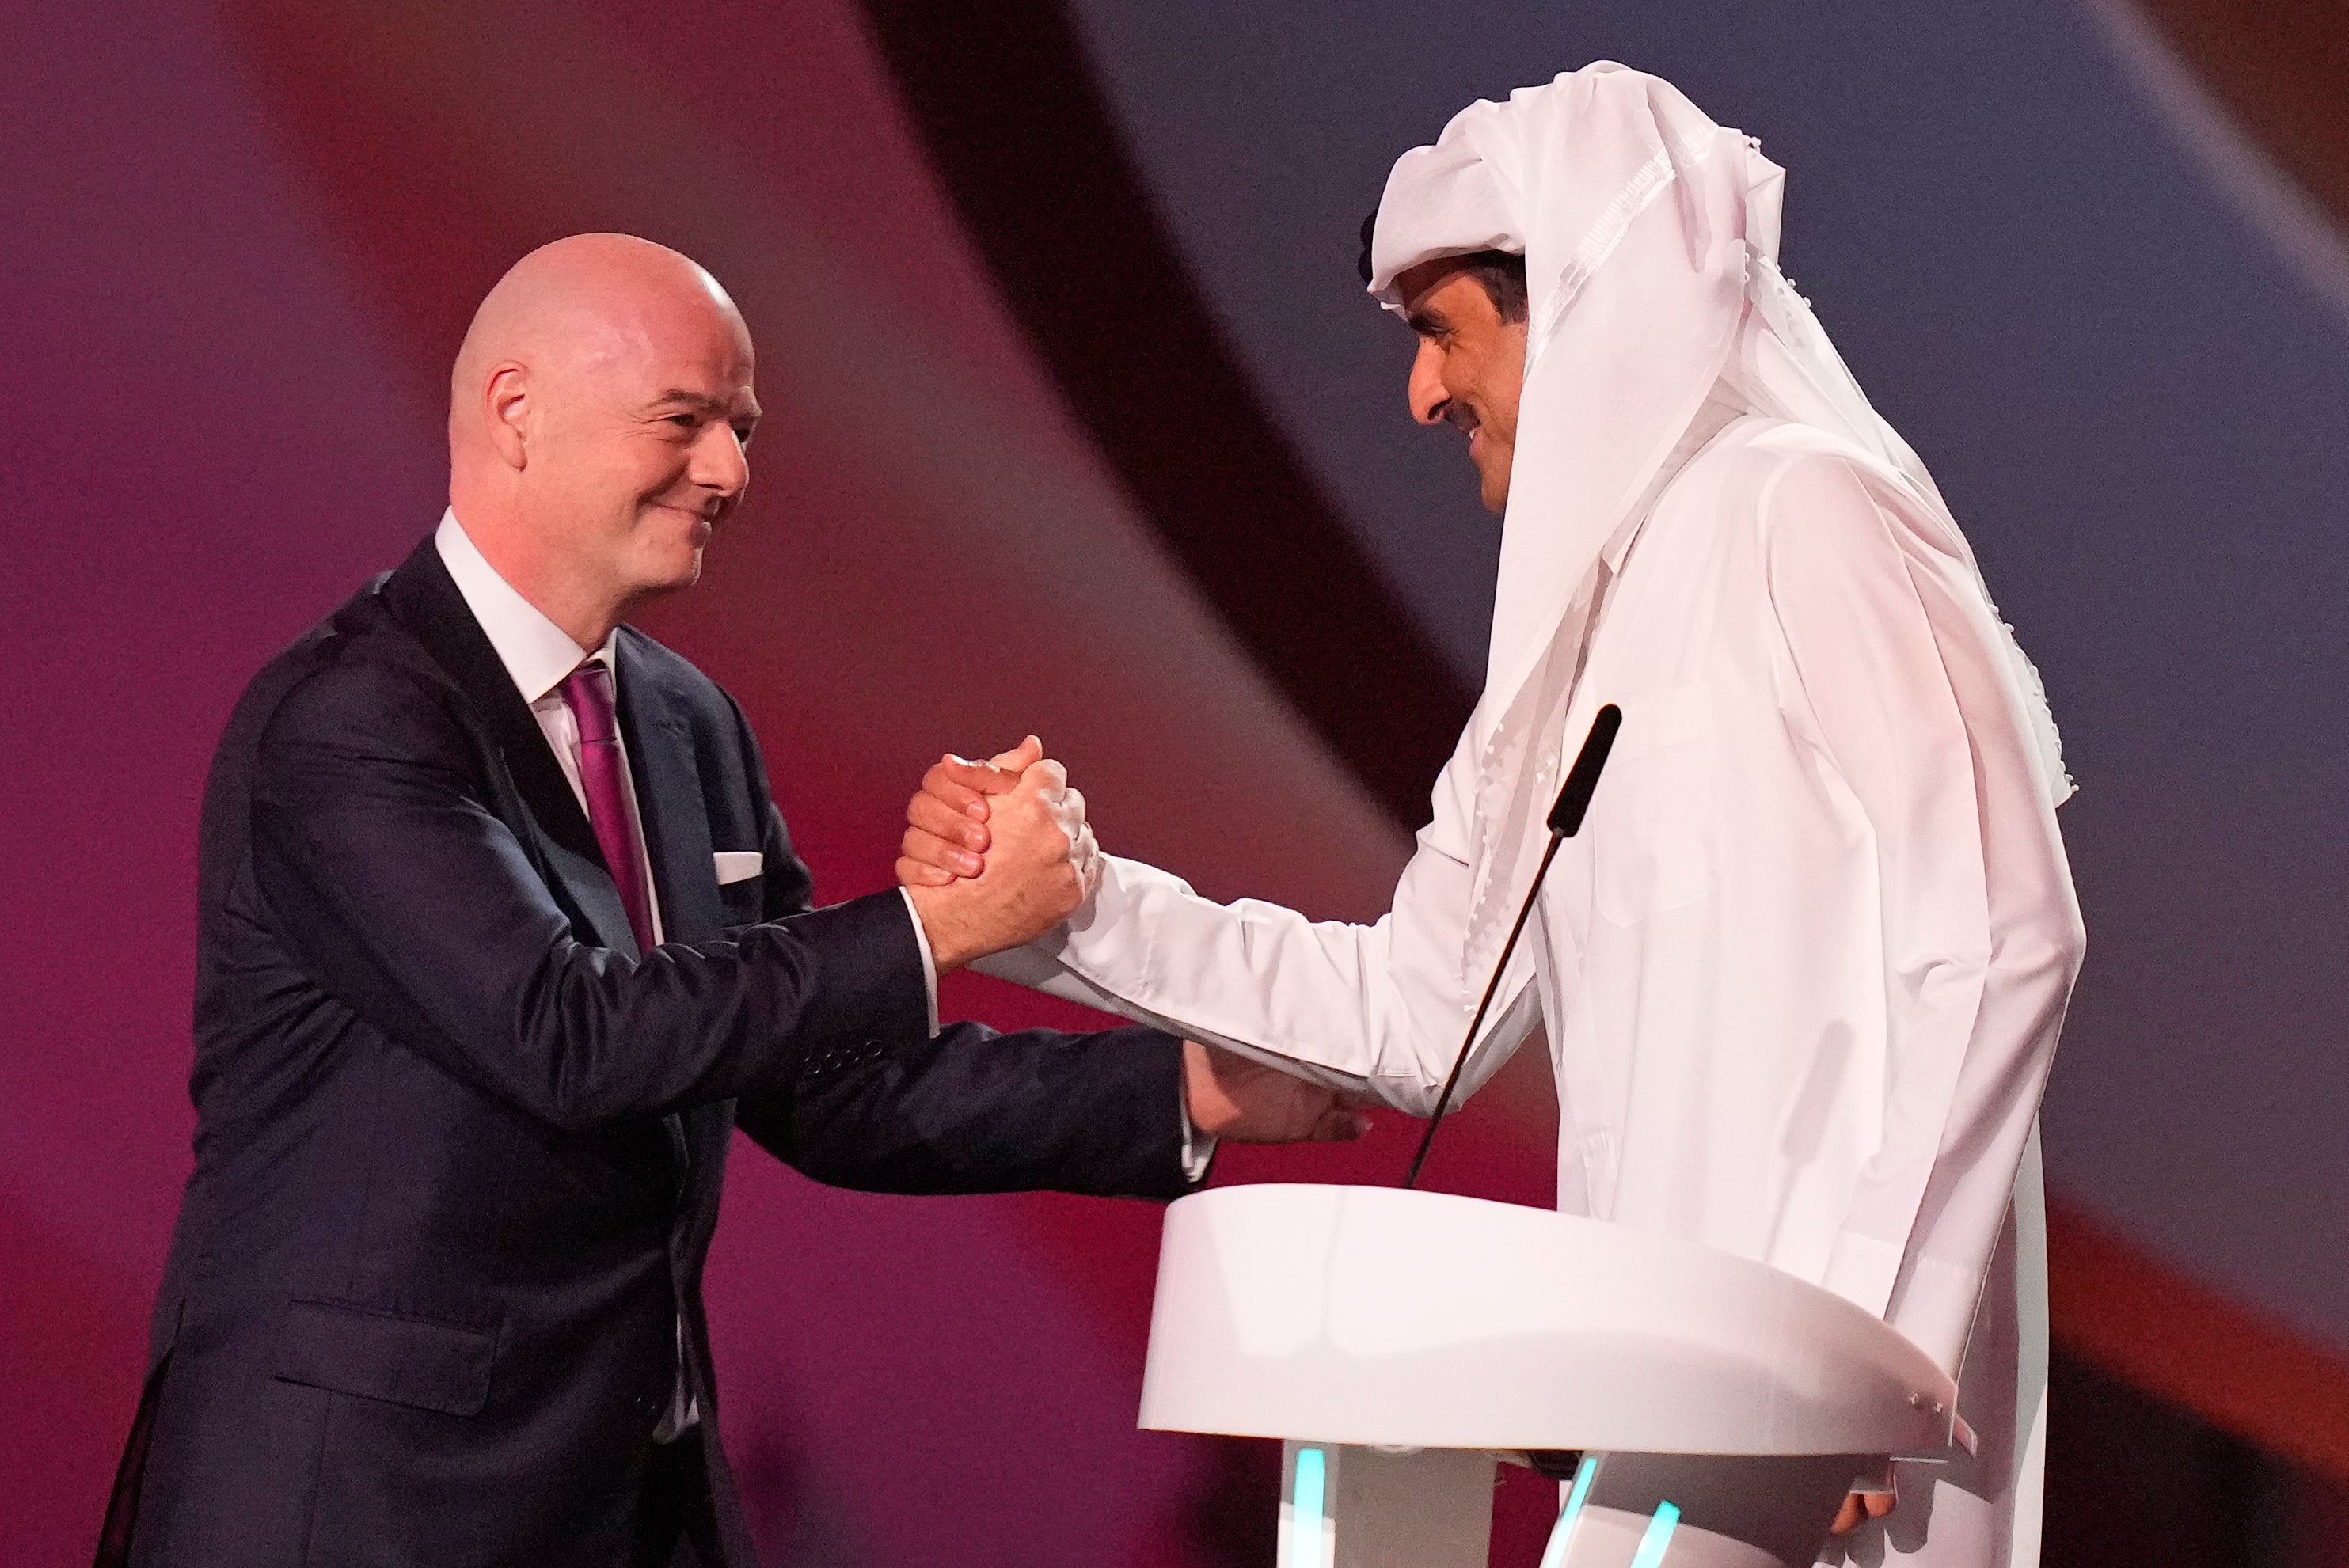 Fifa president Gianni Infantino greets Emir of Qatar Sheikh Tamim bin Hamad Al Thani